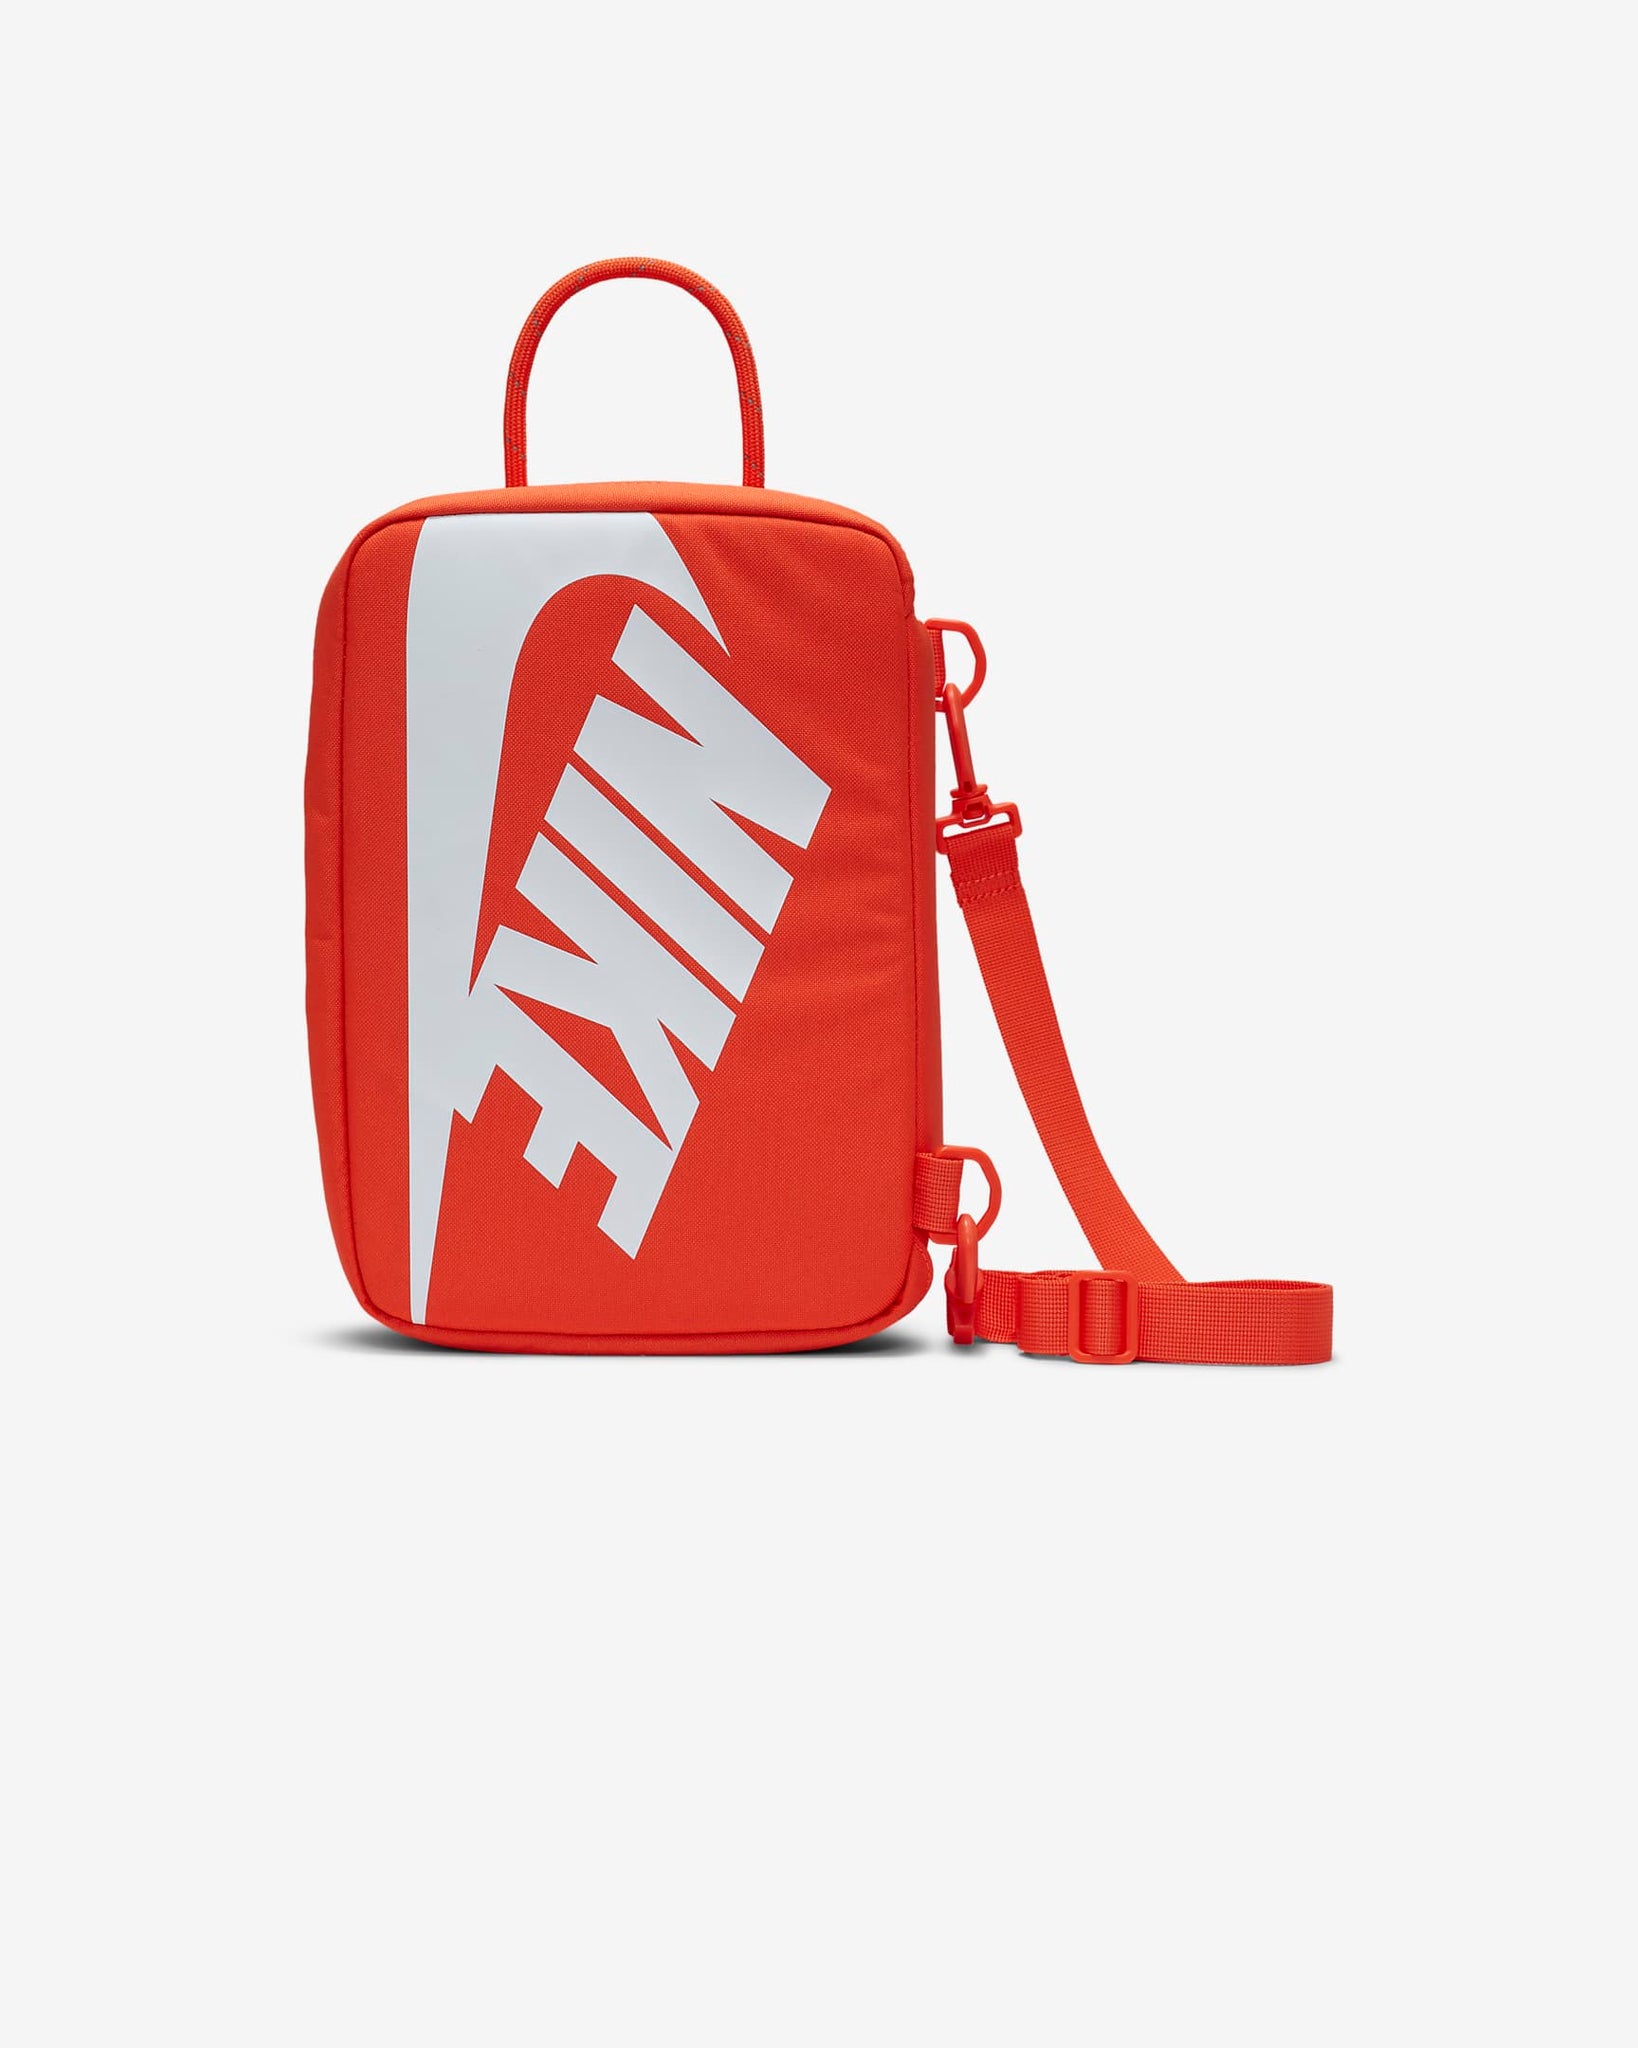 Nike Shoebox bag (small, 8 liters)